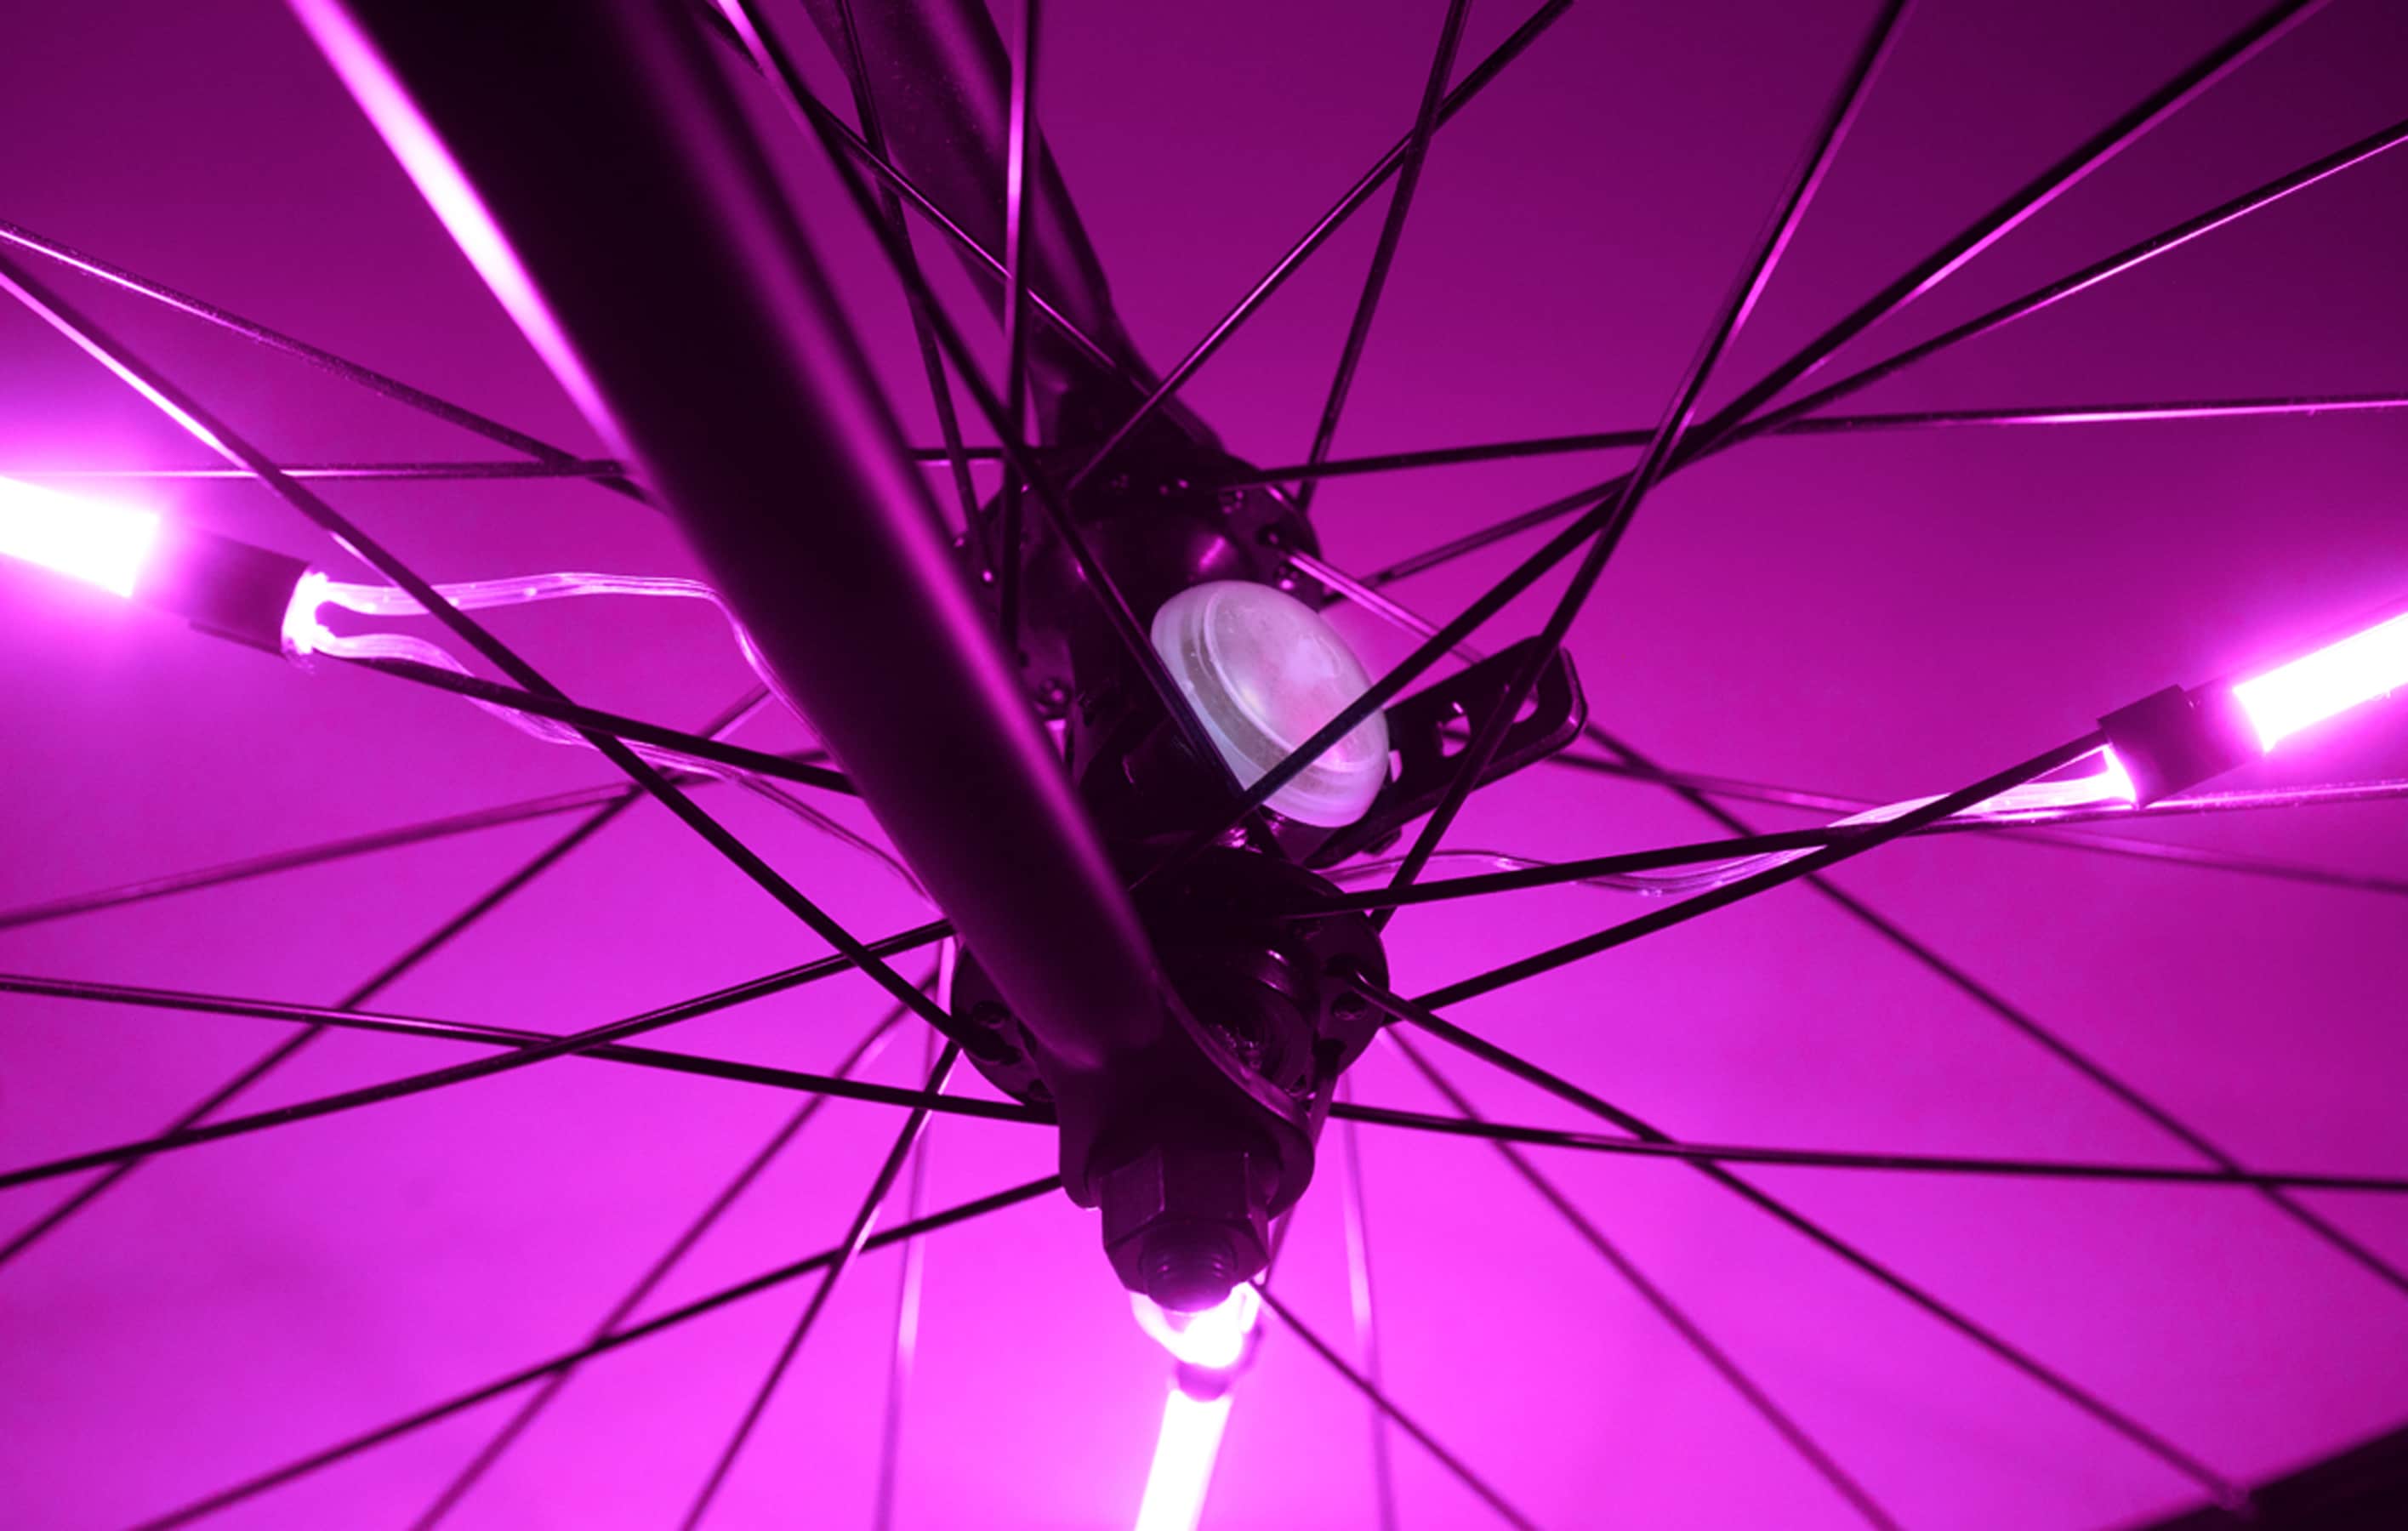 Brightz Spin Kids' Spoke Tubes LED Light - Pink